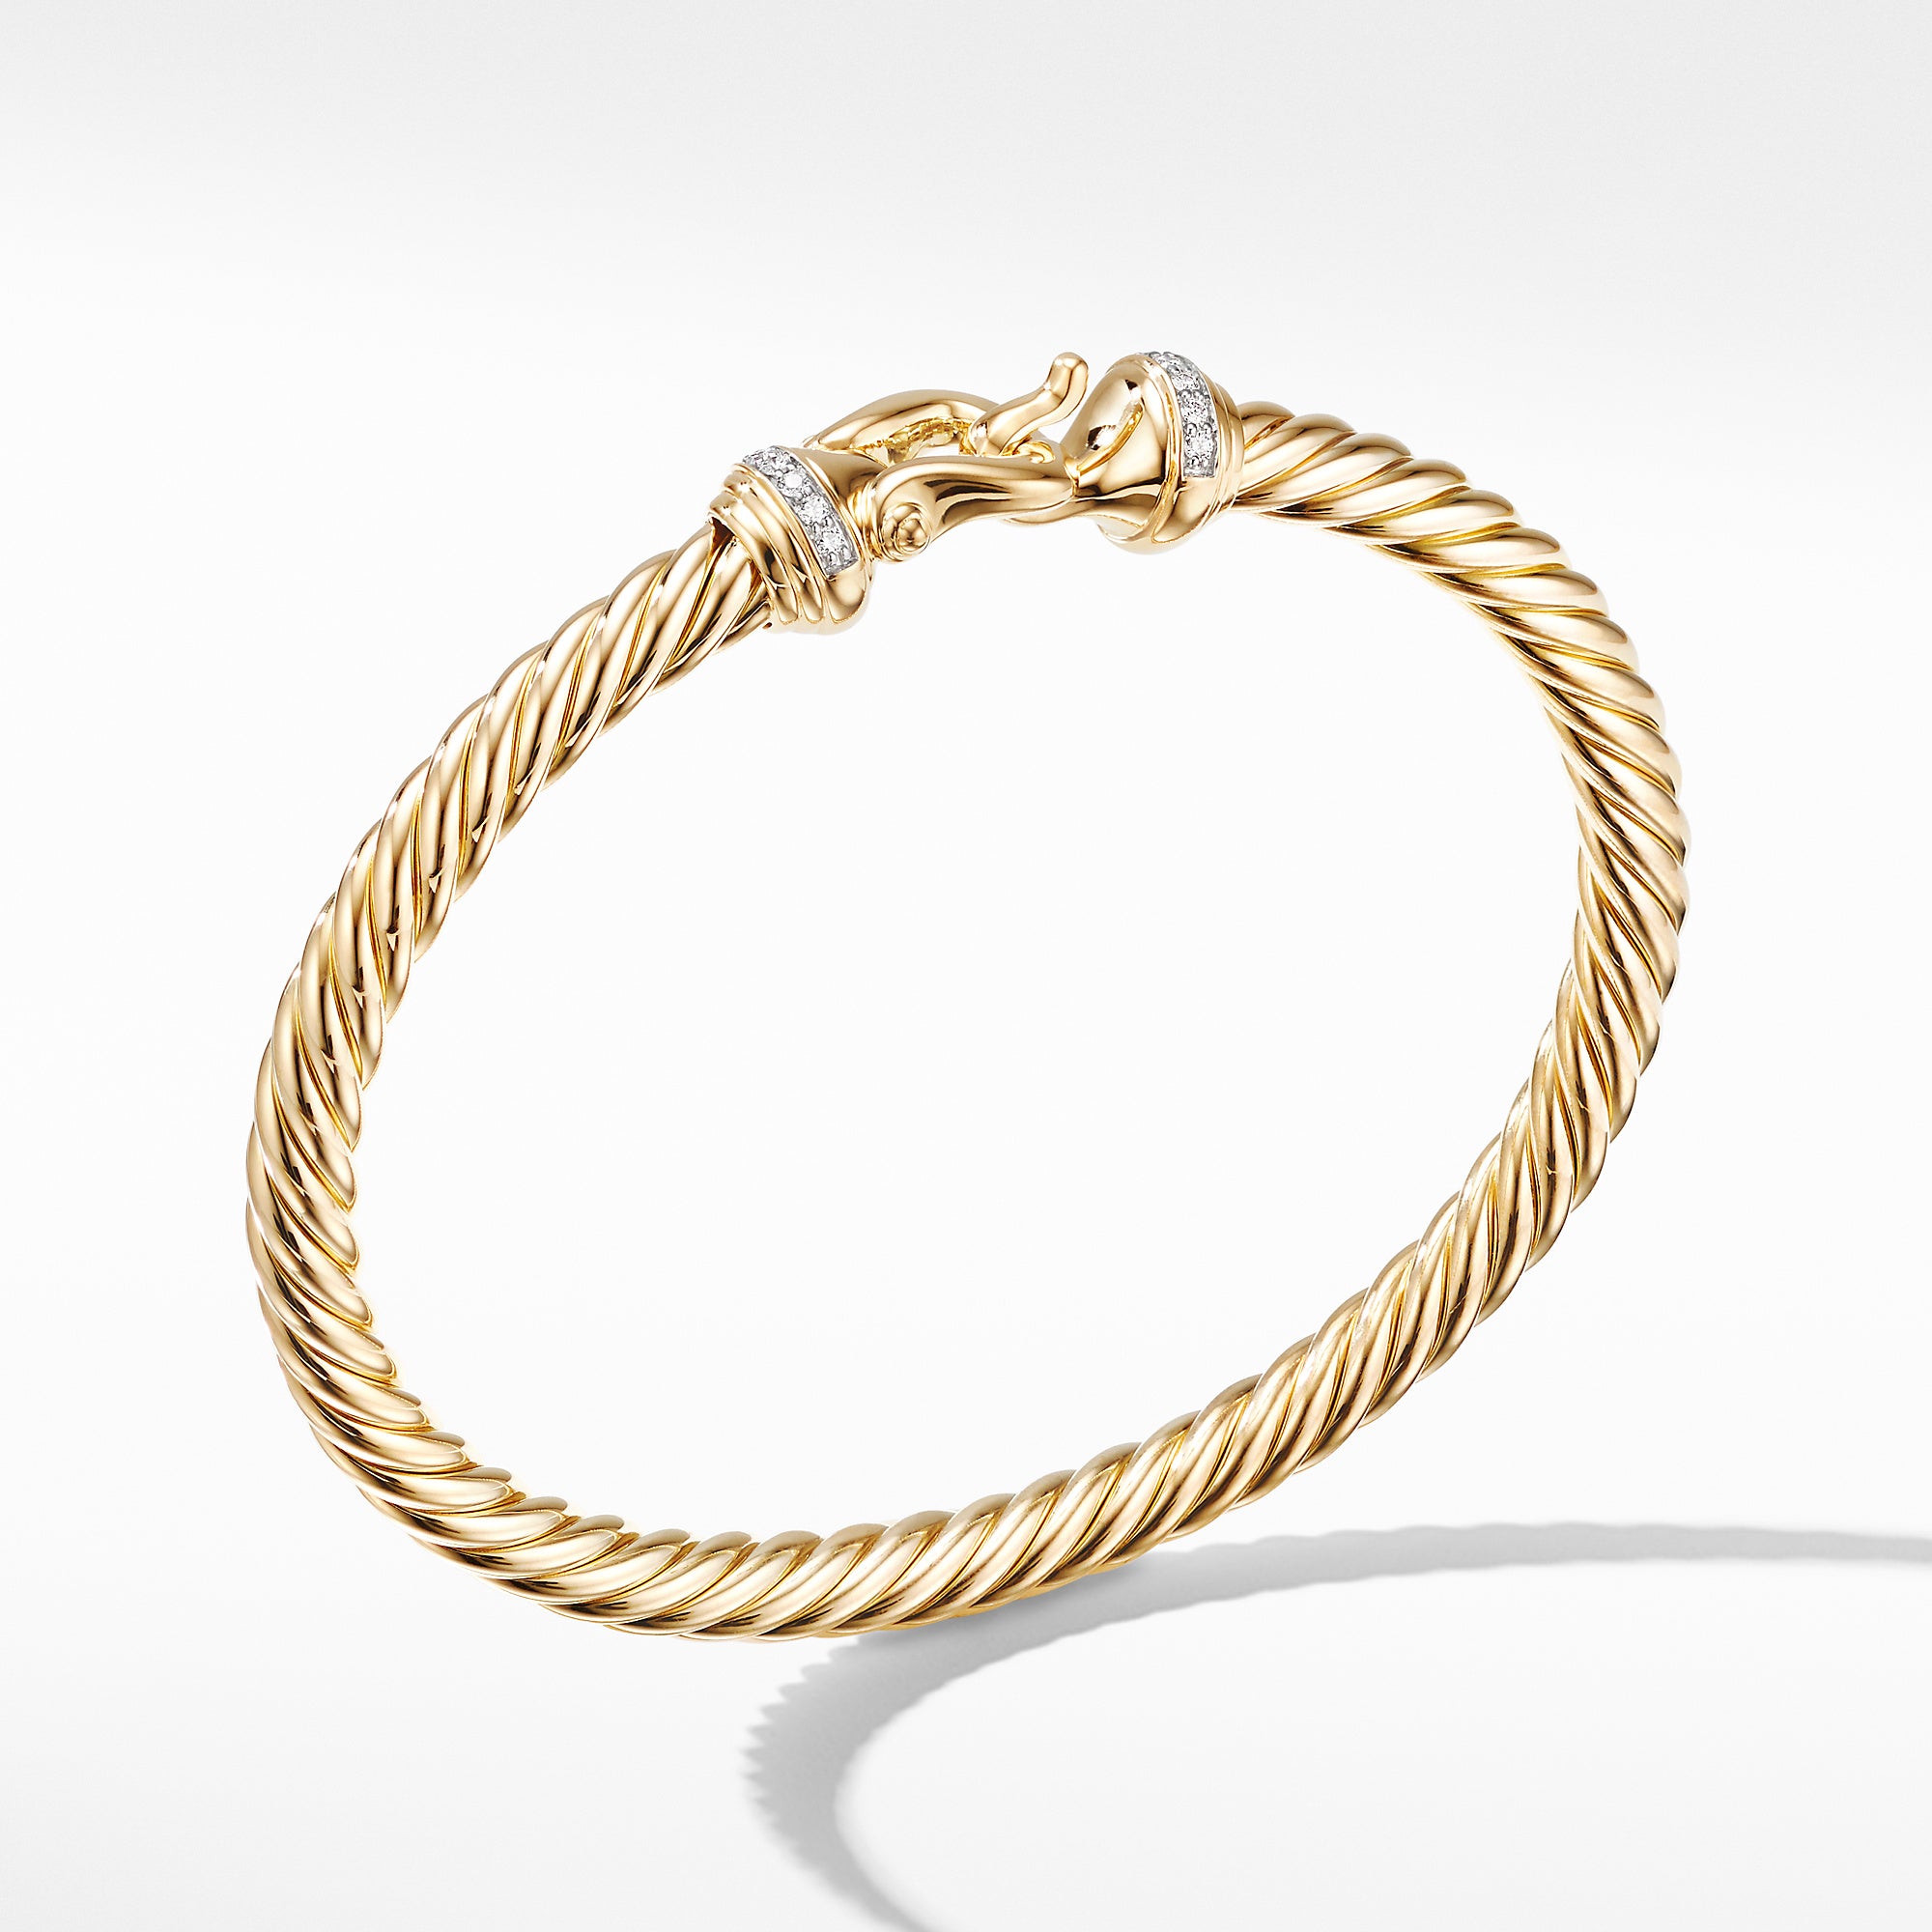 David Yurman Carlyle Bracelet in 18K Yellow Gold with Pavé Diamonds